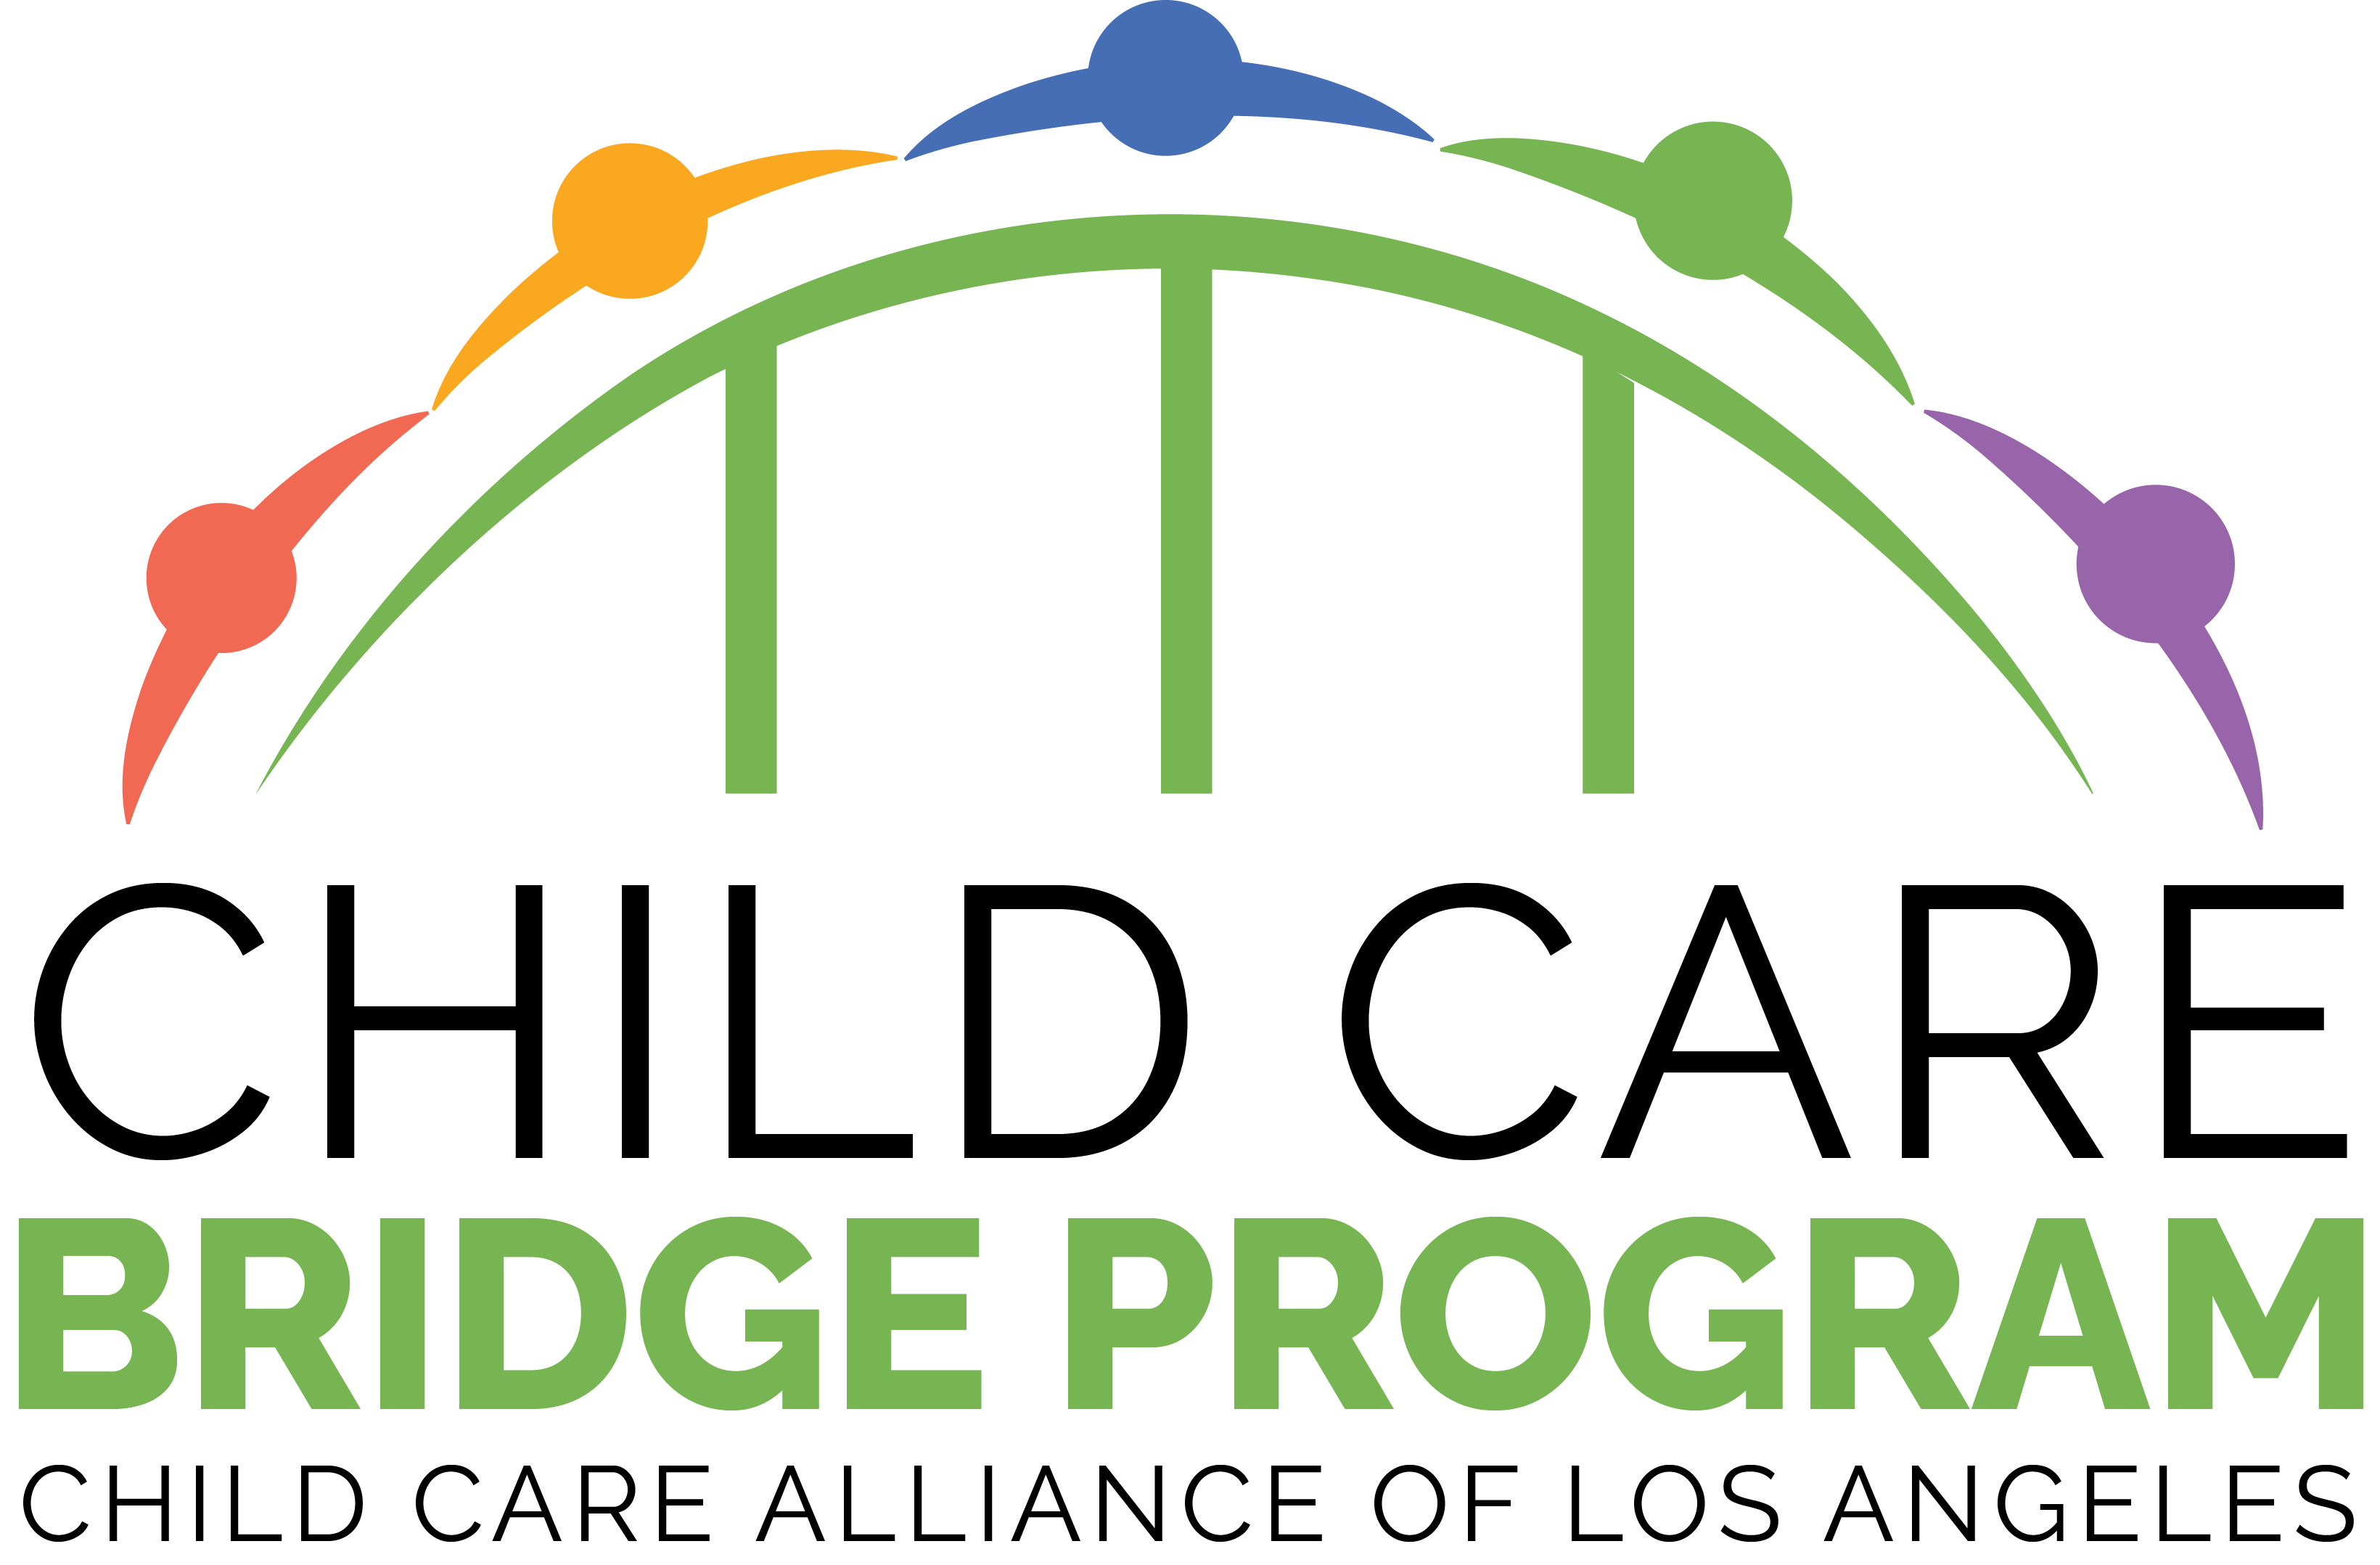 Emergency Child Care Bridge Program